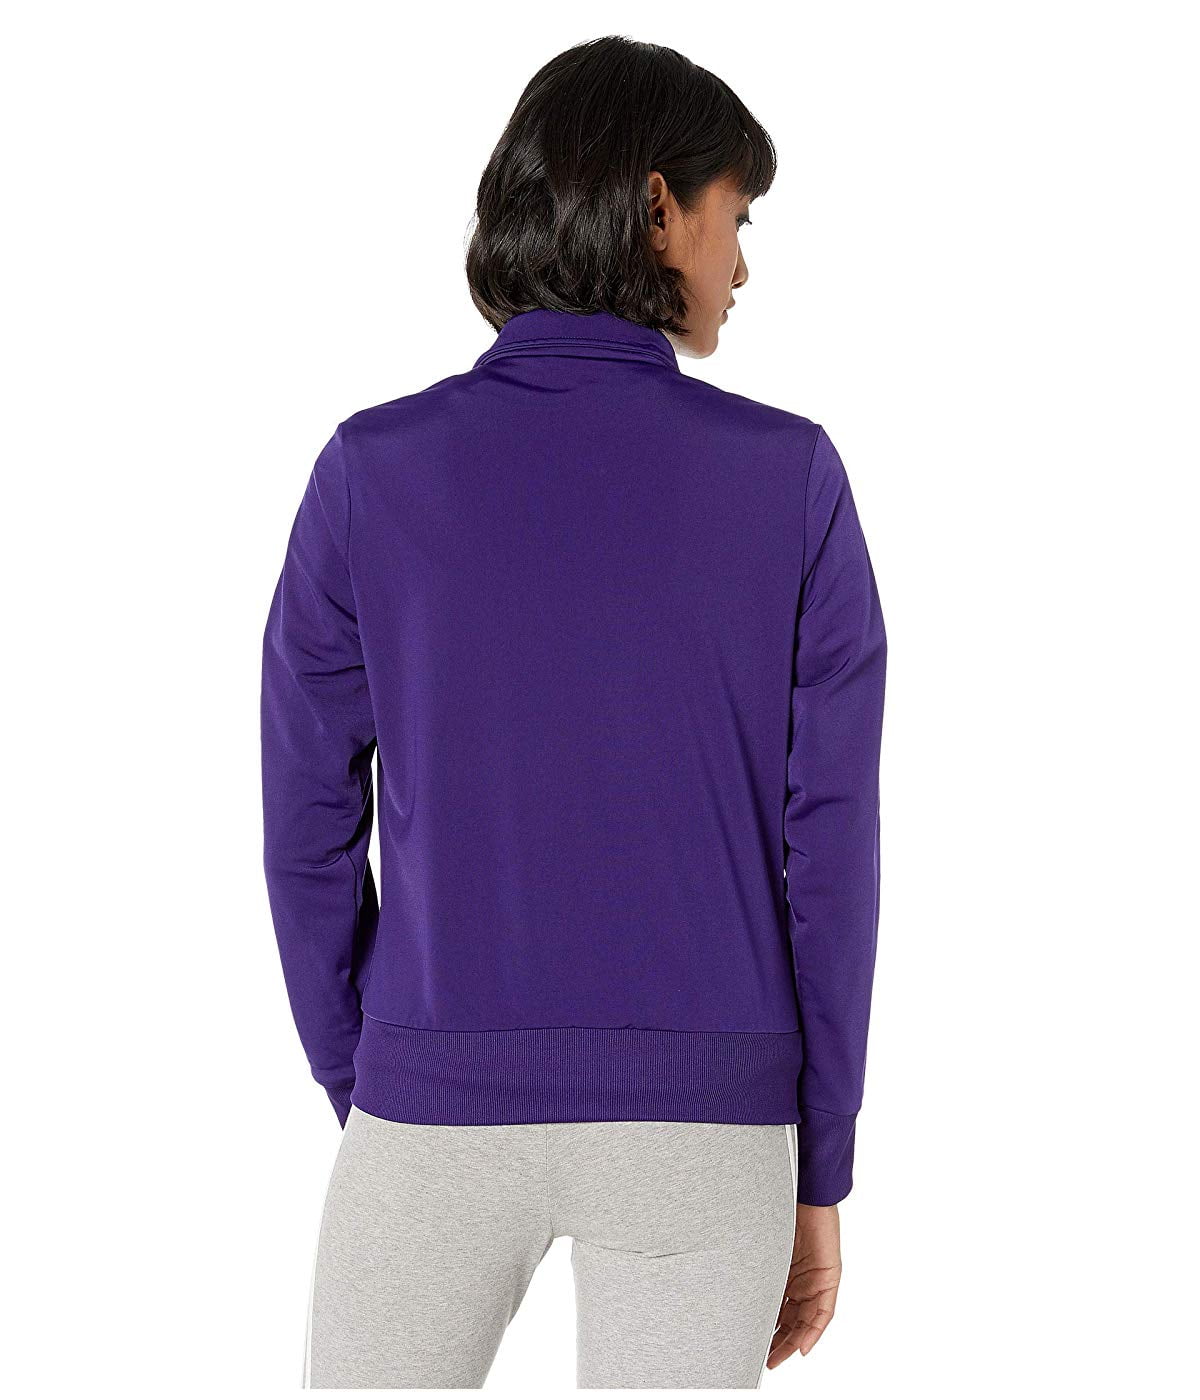 firebird track jacket purple